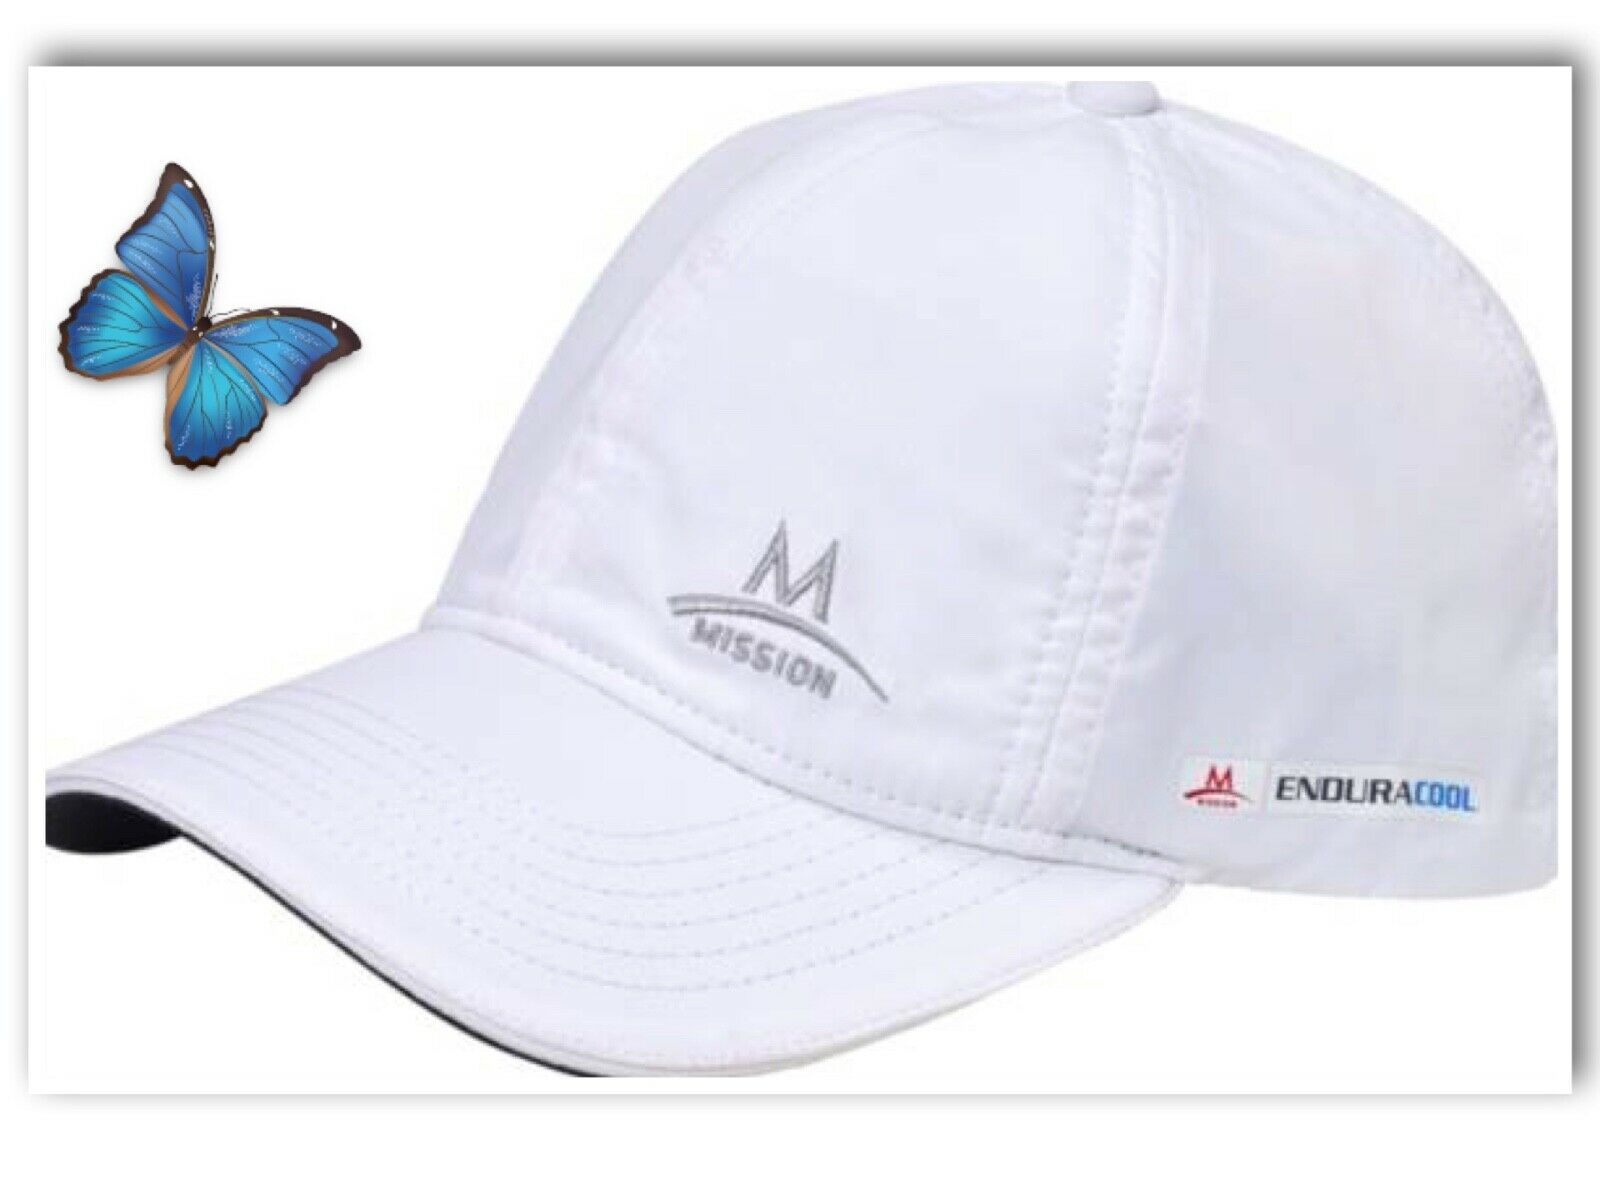 Mission Cooling Hat Men Women Cap Upf 50 Sun Protection Adjustable White